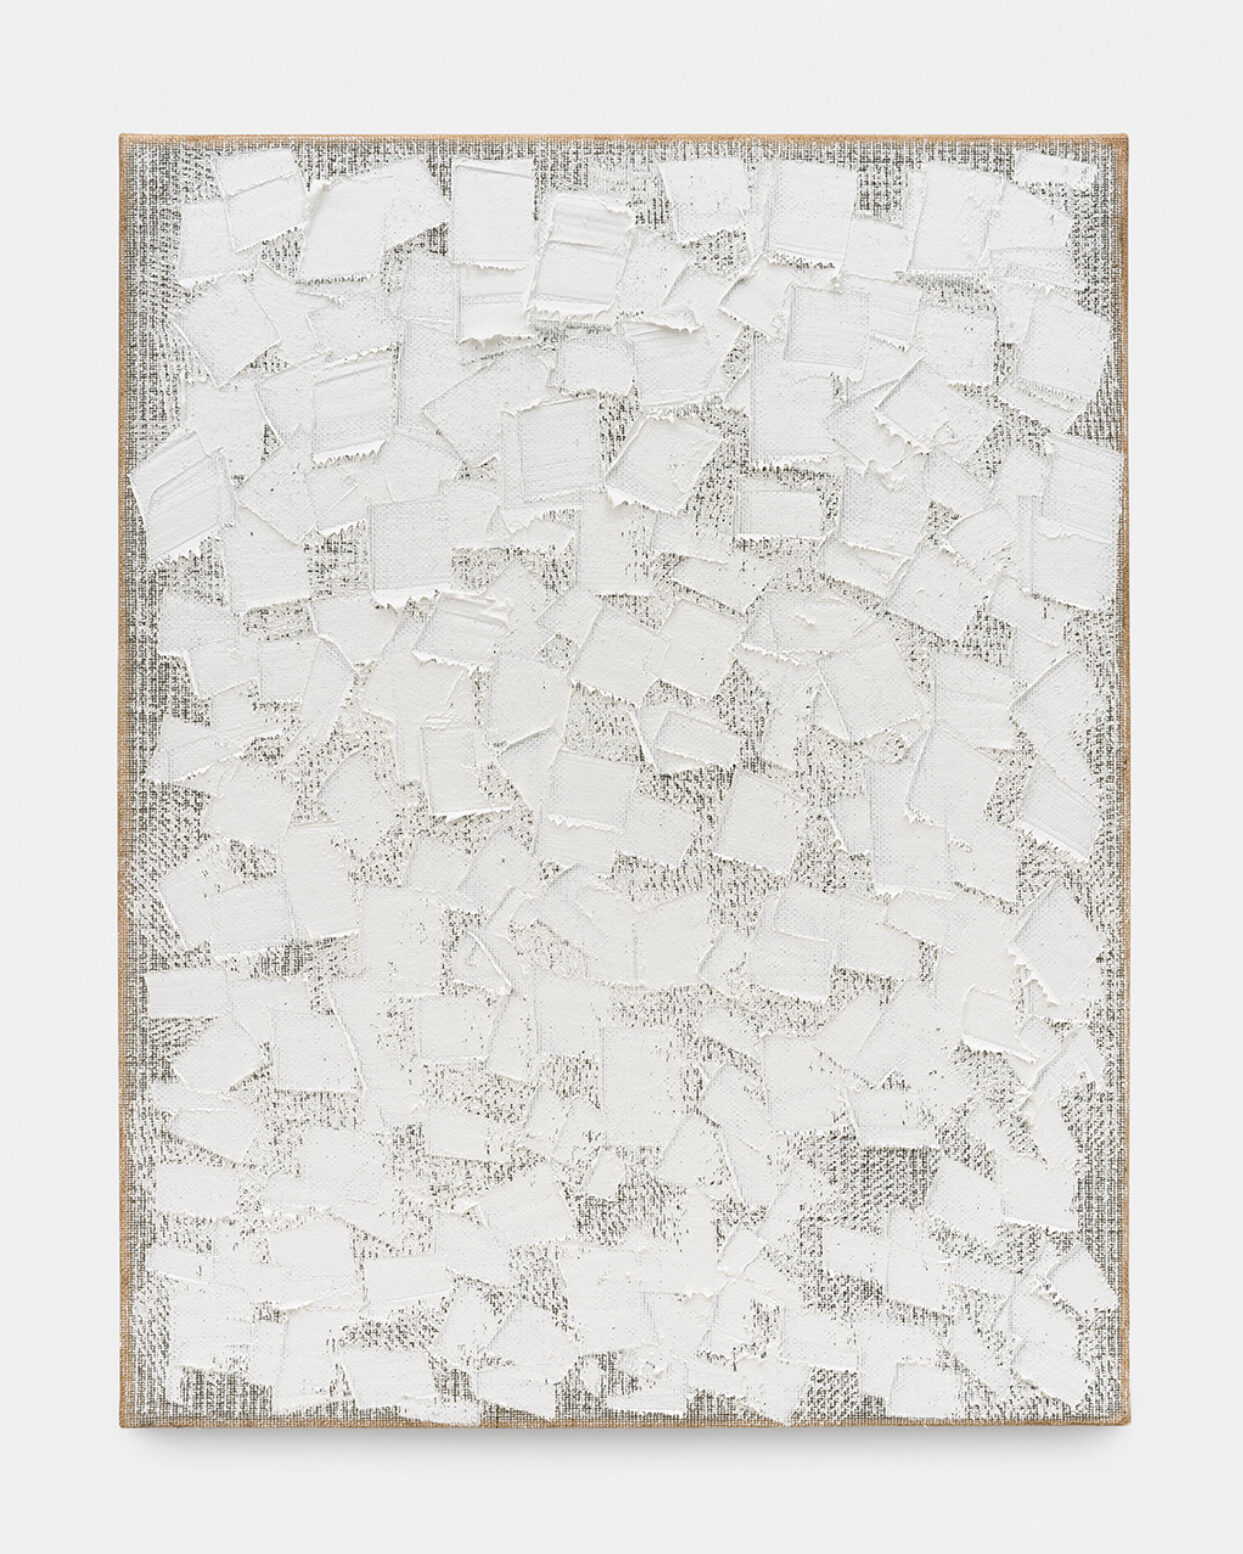 Ha Chong-hyun, Conjunction 22-58, 2022, Oil on hemp cloth, 117 × 91 cm © The Artist, Image Courtesy Almine Rech